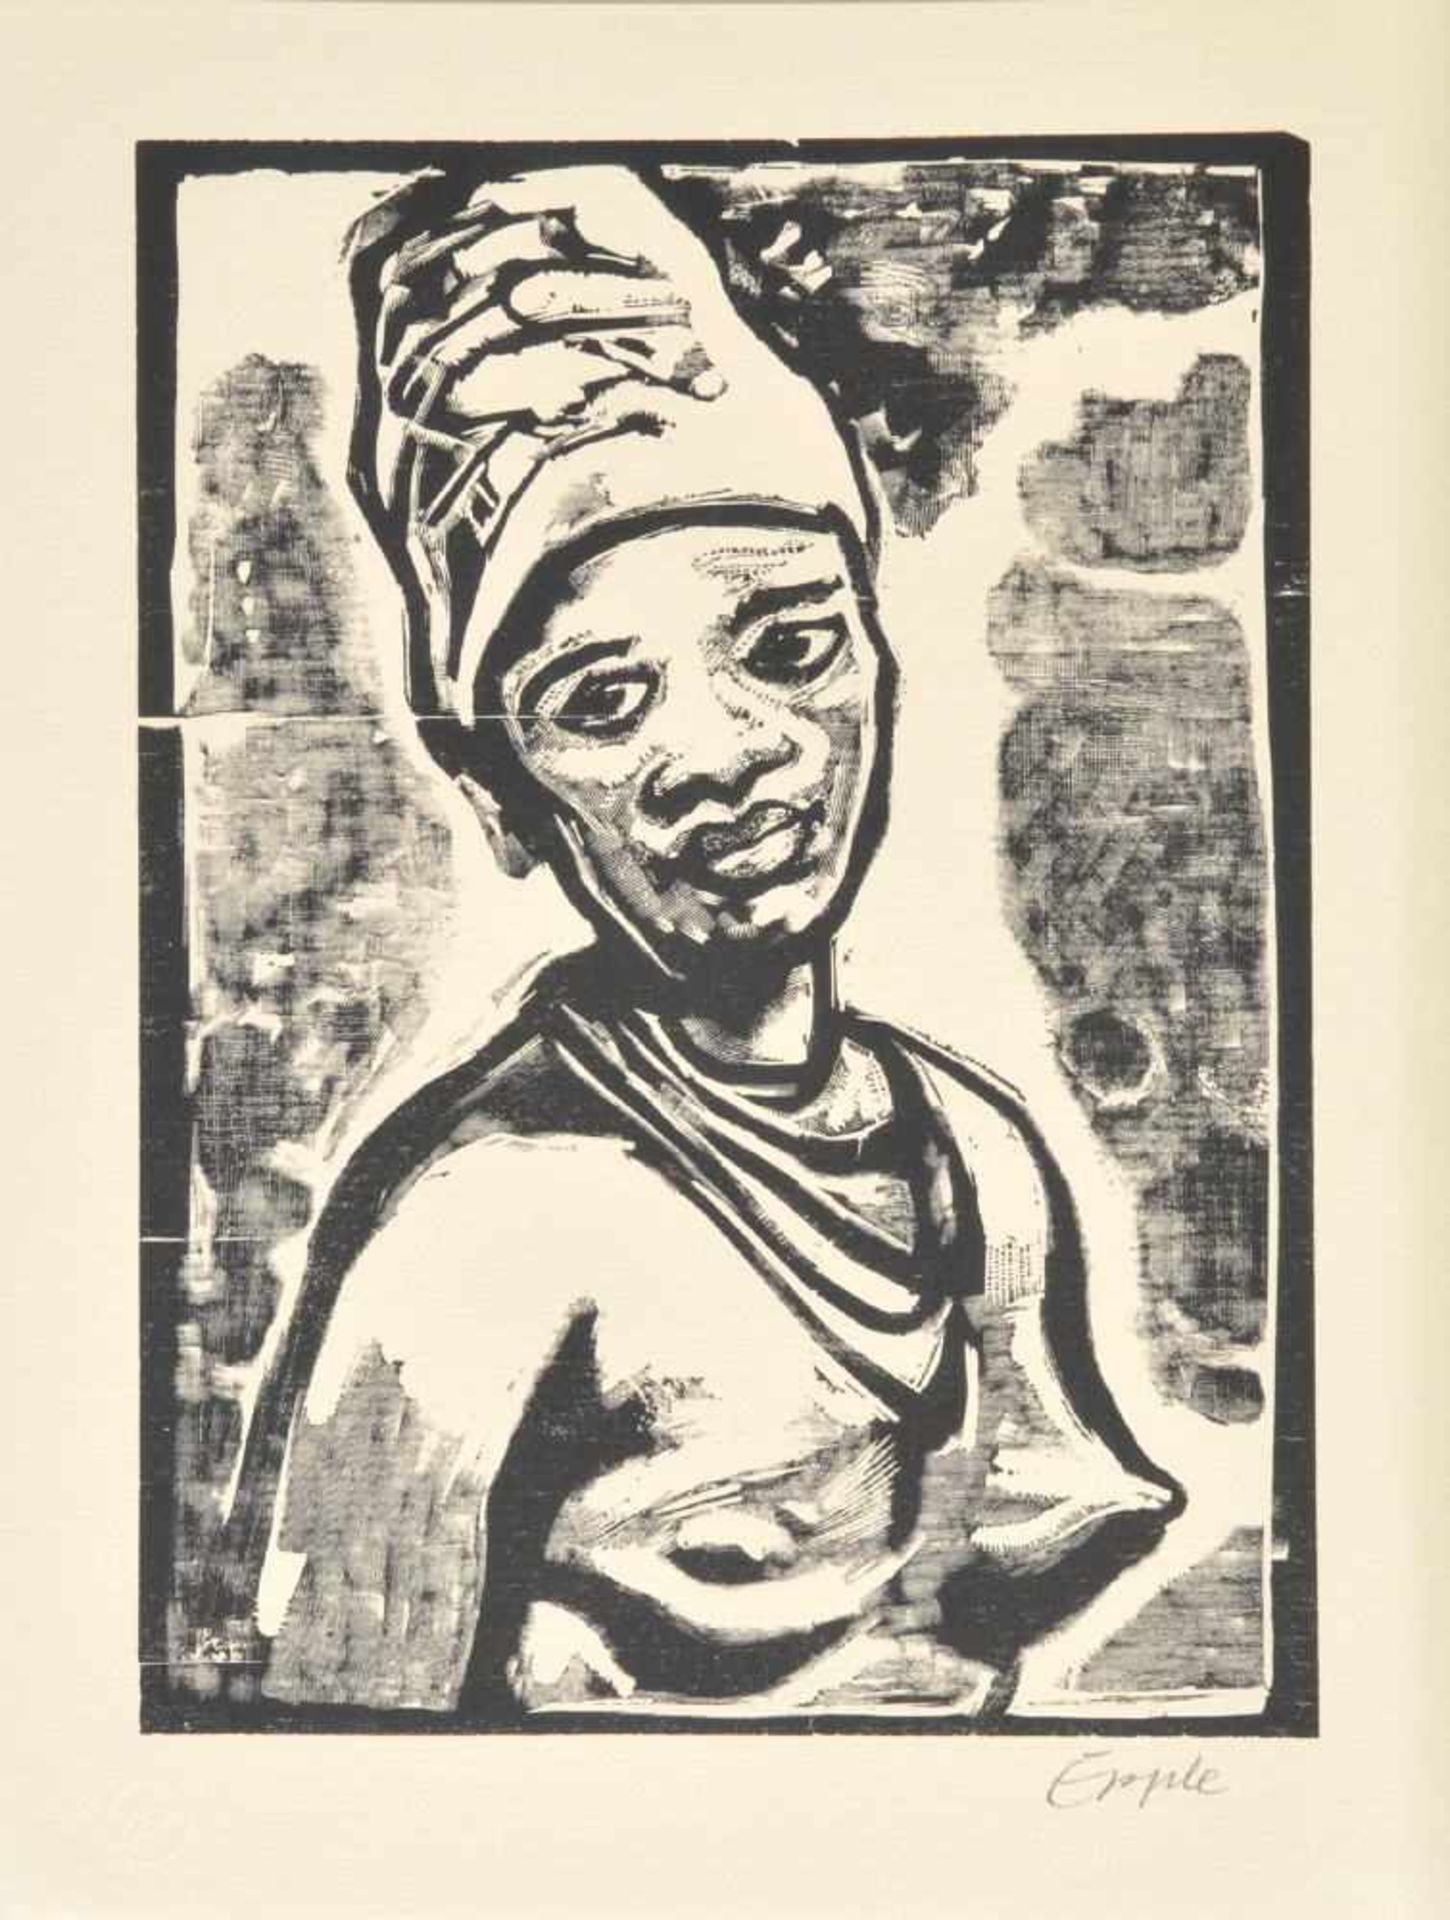 Epple, Waldemar, 1919 Mannheim - 1985Linolschnitt, 19,5 x 14 cm, " Afrikanerin ", handsign., Lit.: